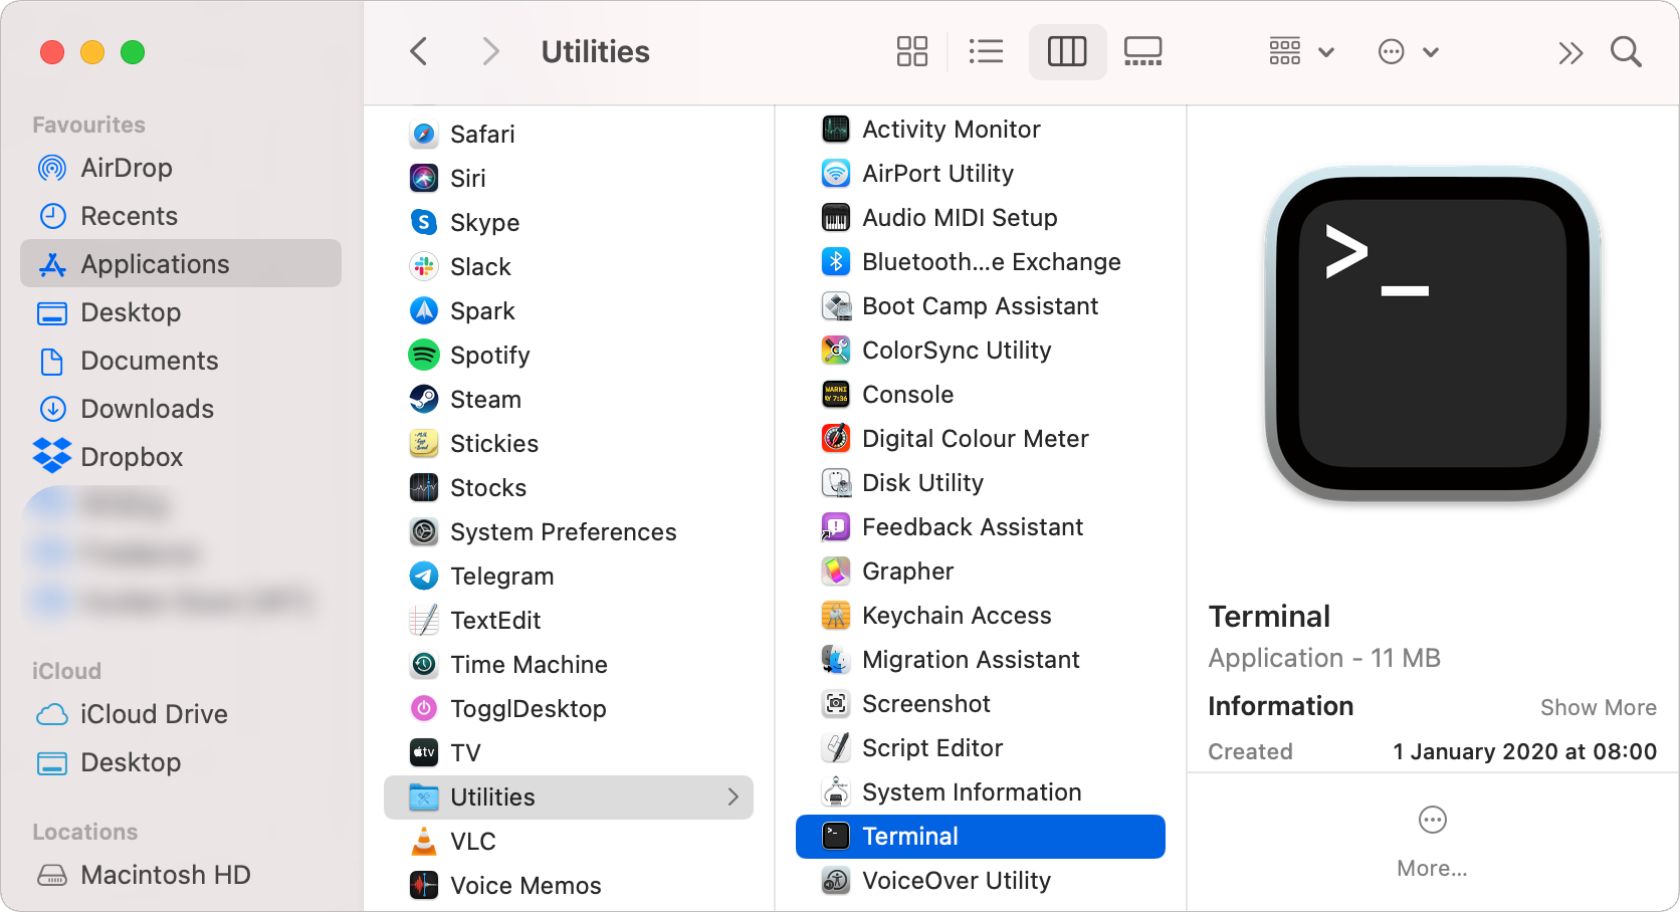 Terminal in Applications folder in Finder - Come aprire il terminale su un Mac